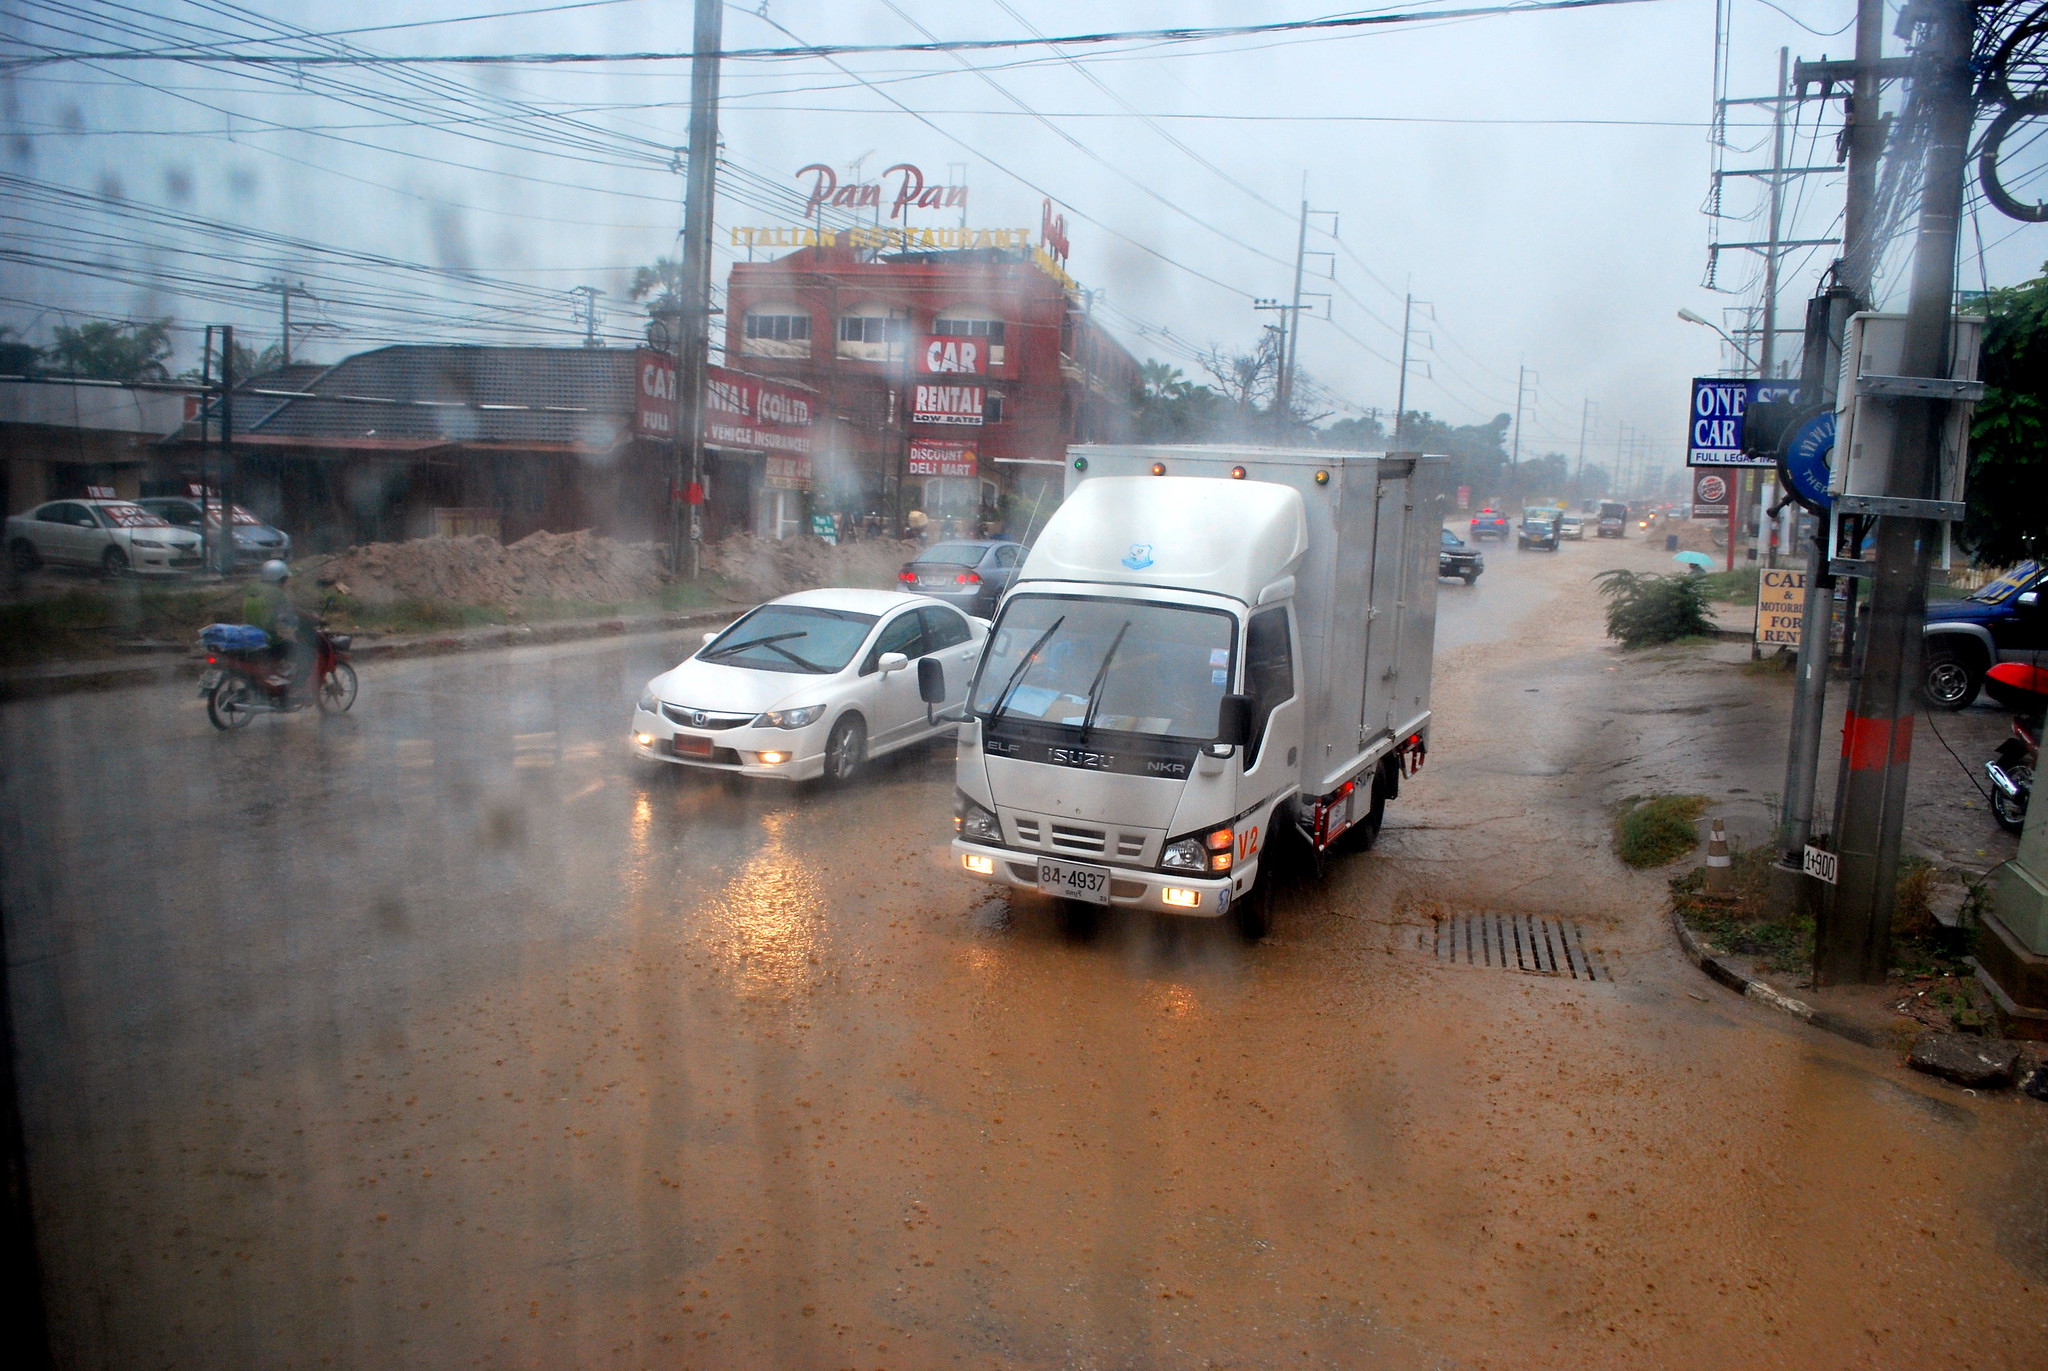 Flooded street in Pattaya after heavy rain